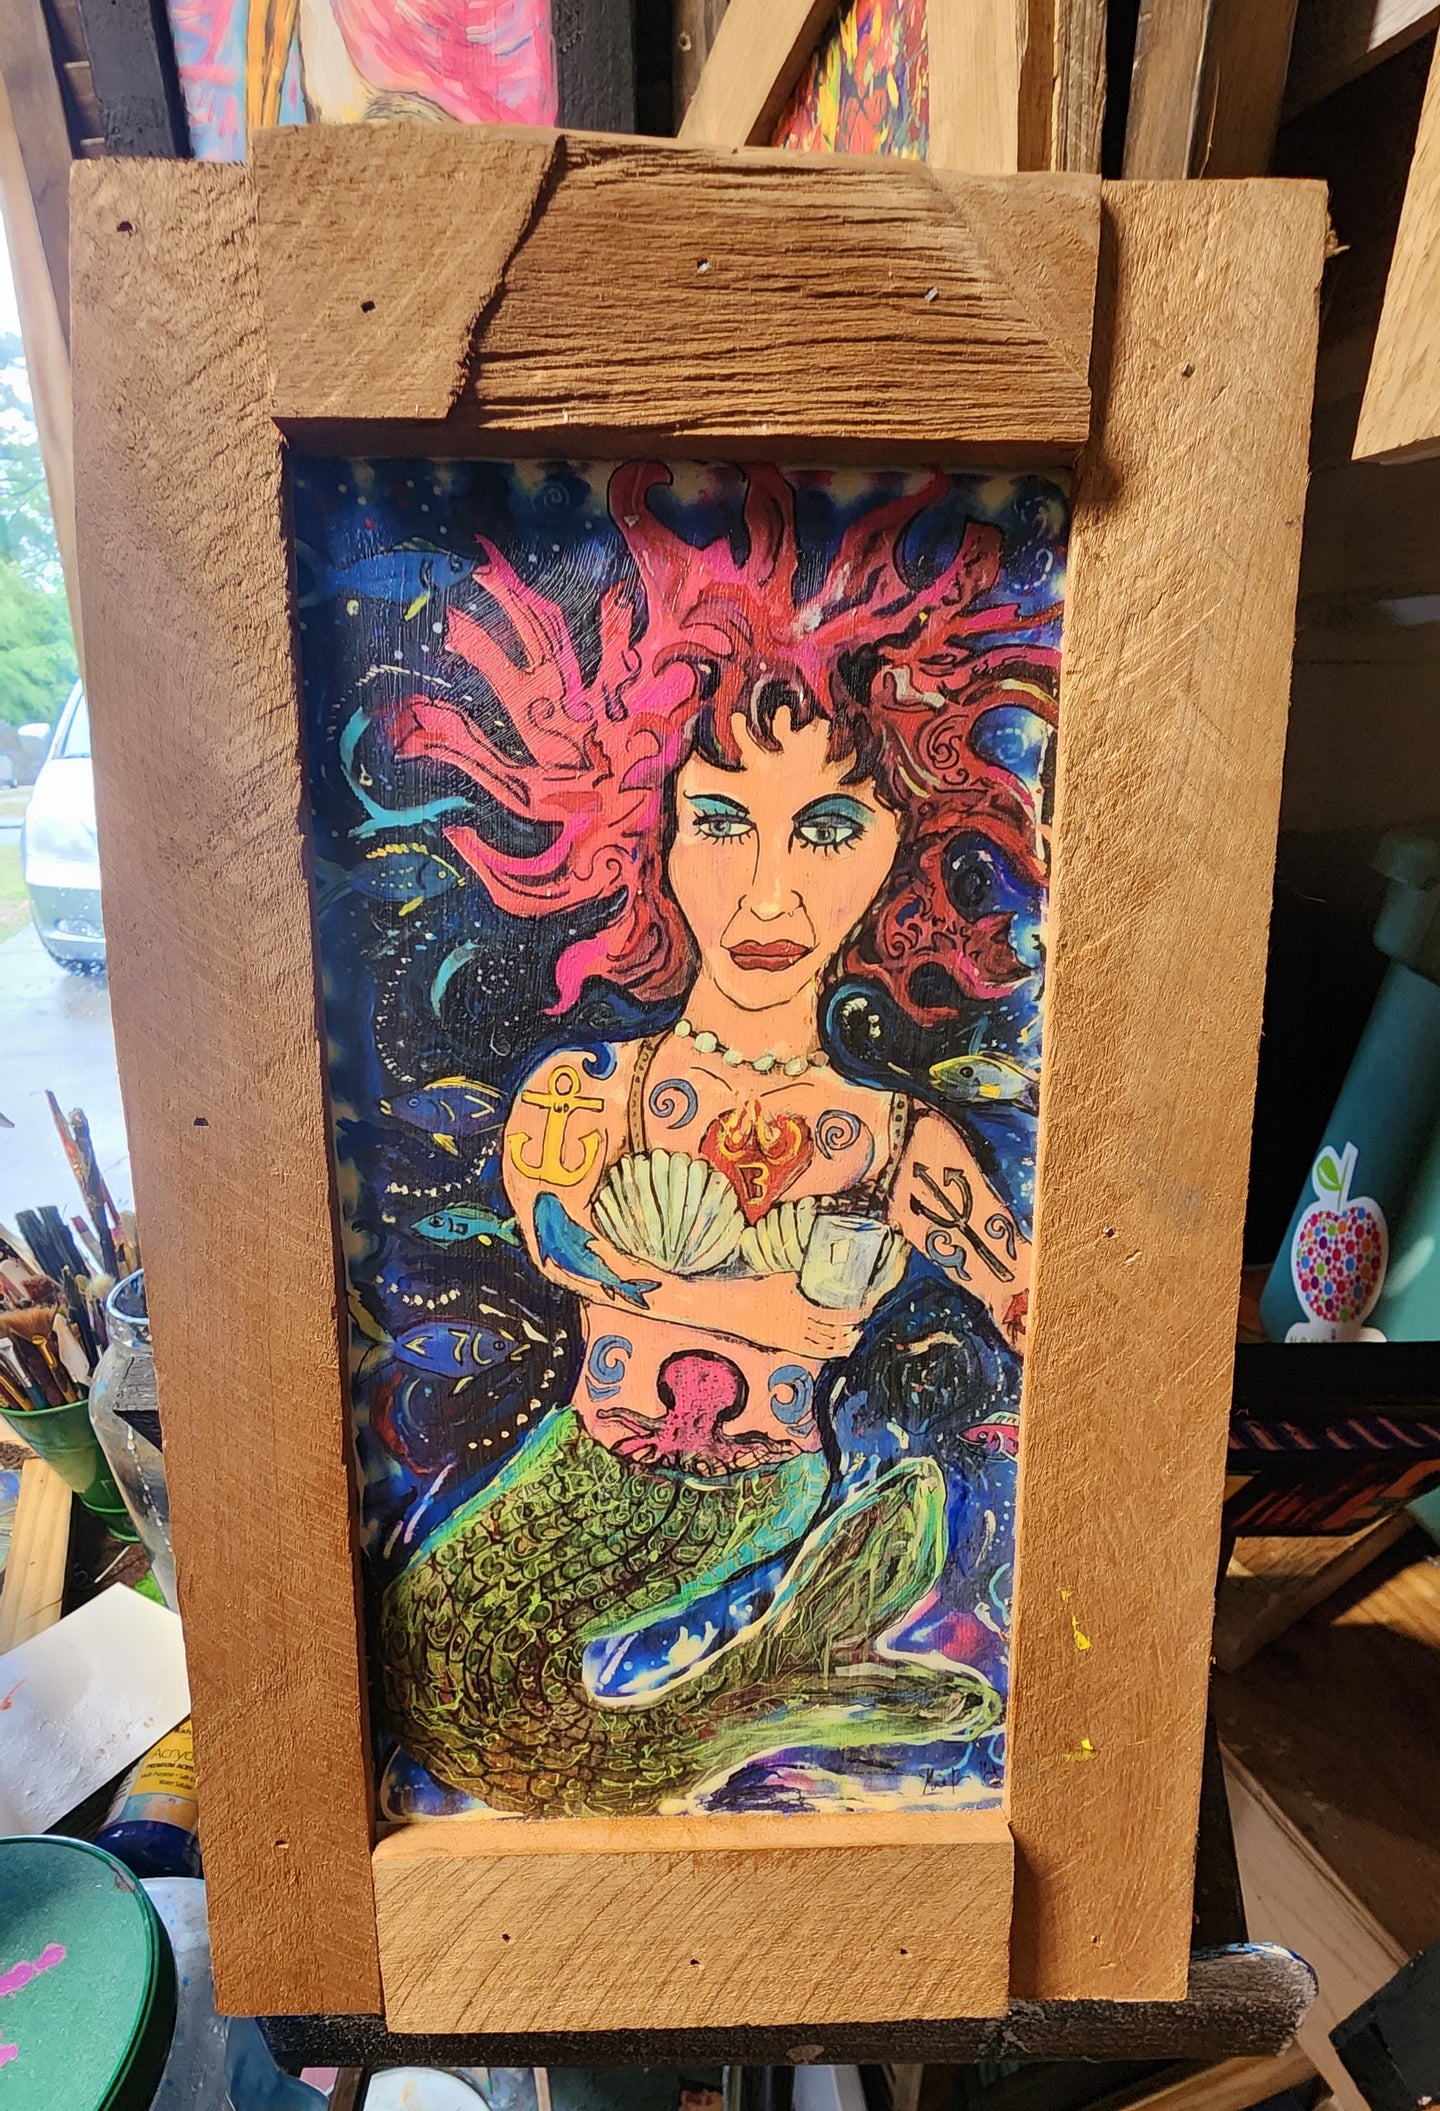 13x8 framed print thirsty mermaid